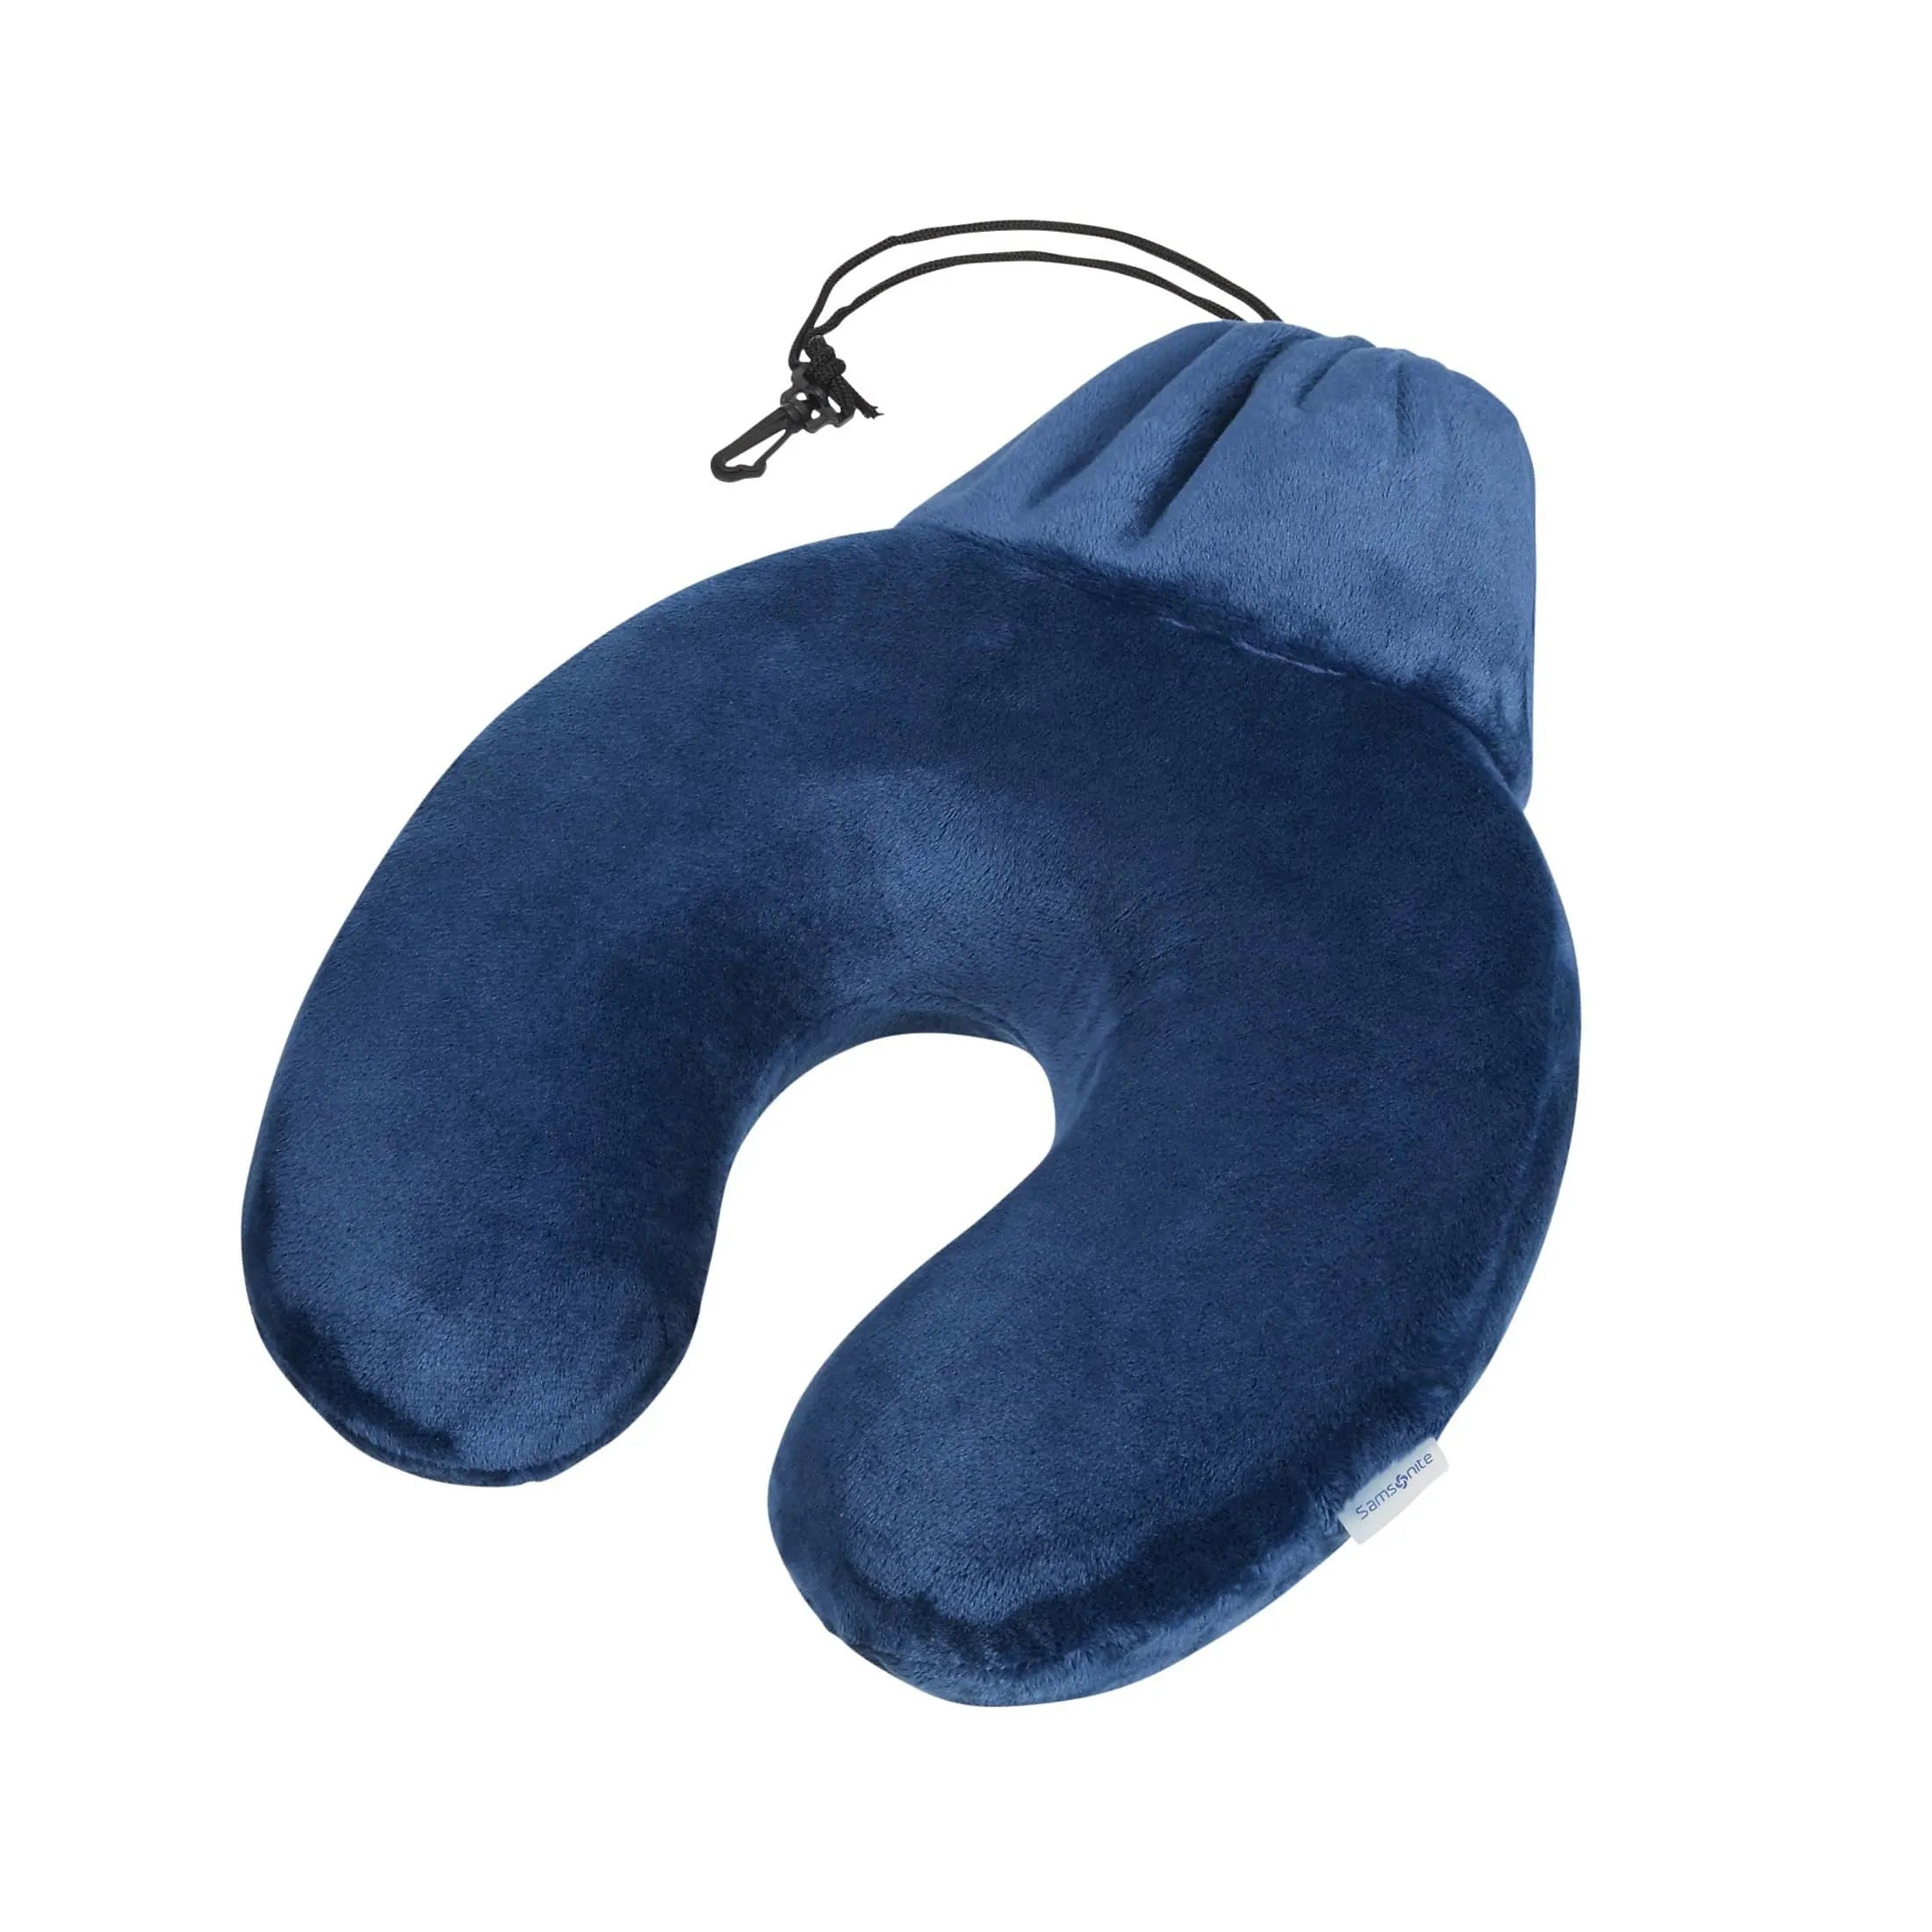 Samsonite Travel Accessories Memory Foam neck pillow - midnight blue